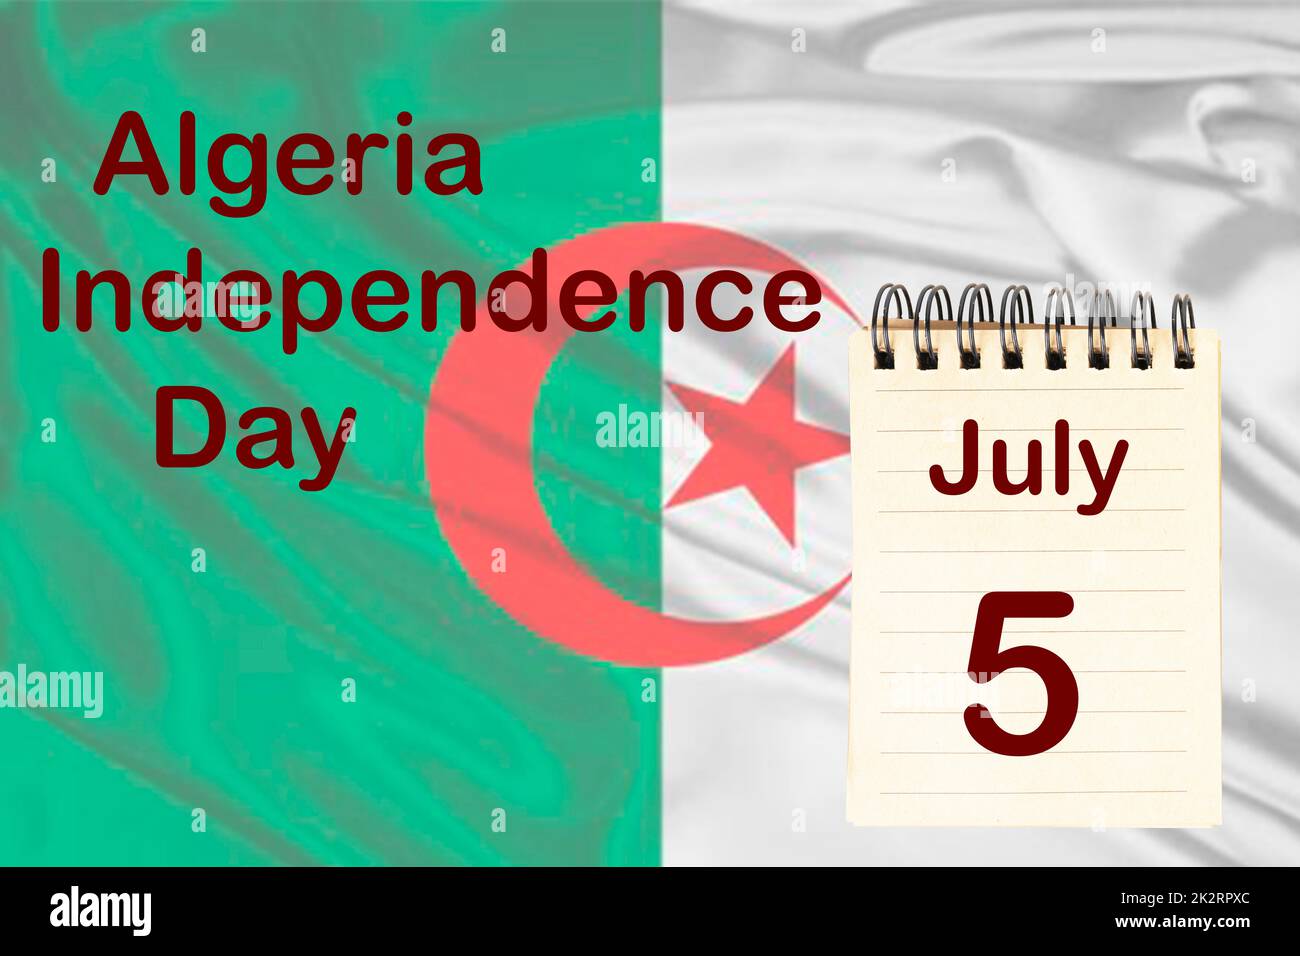 Algeria Independance Day Stock Photo